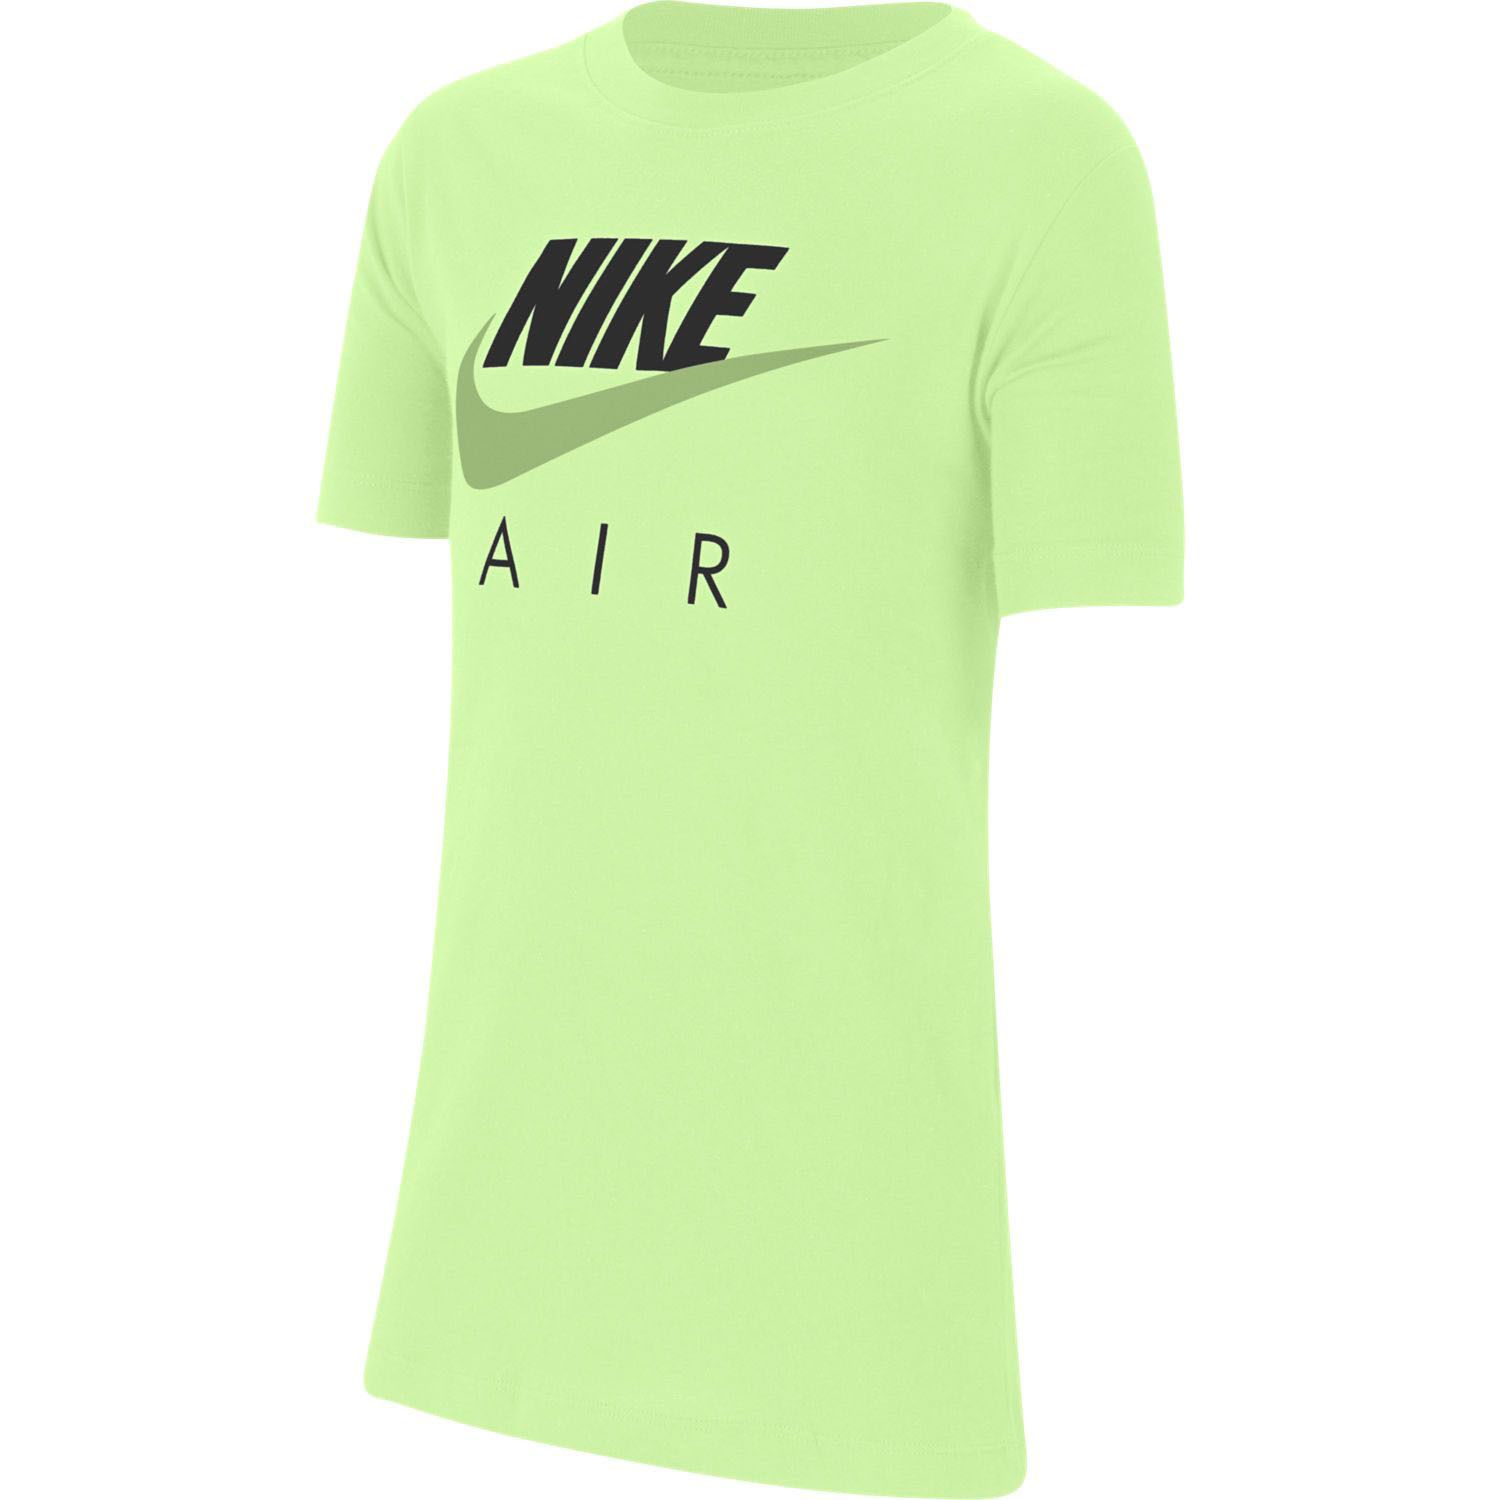 Nike Shirts for Boys | Kohl's